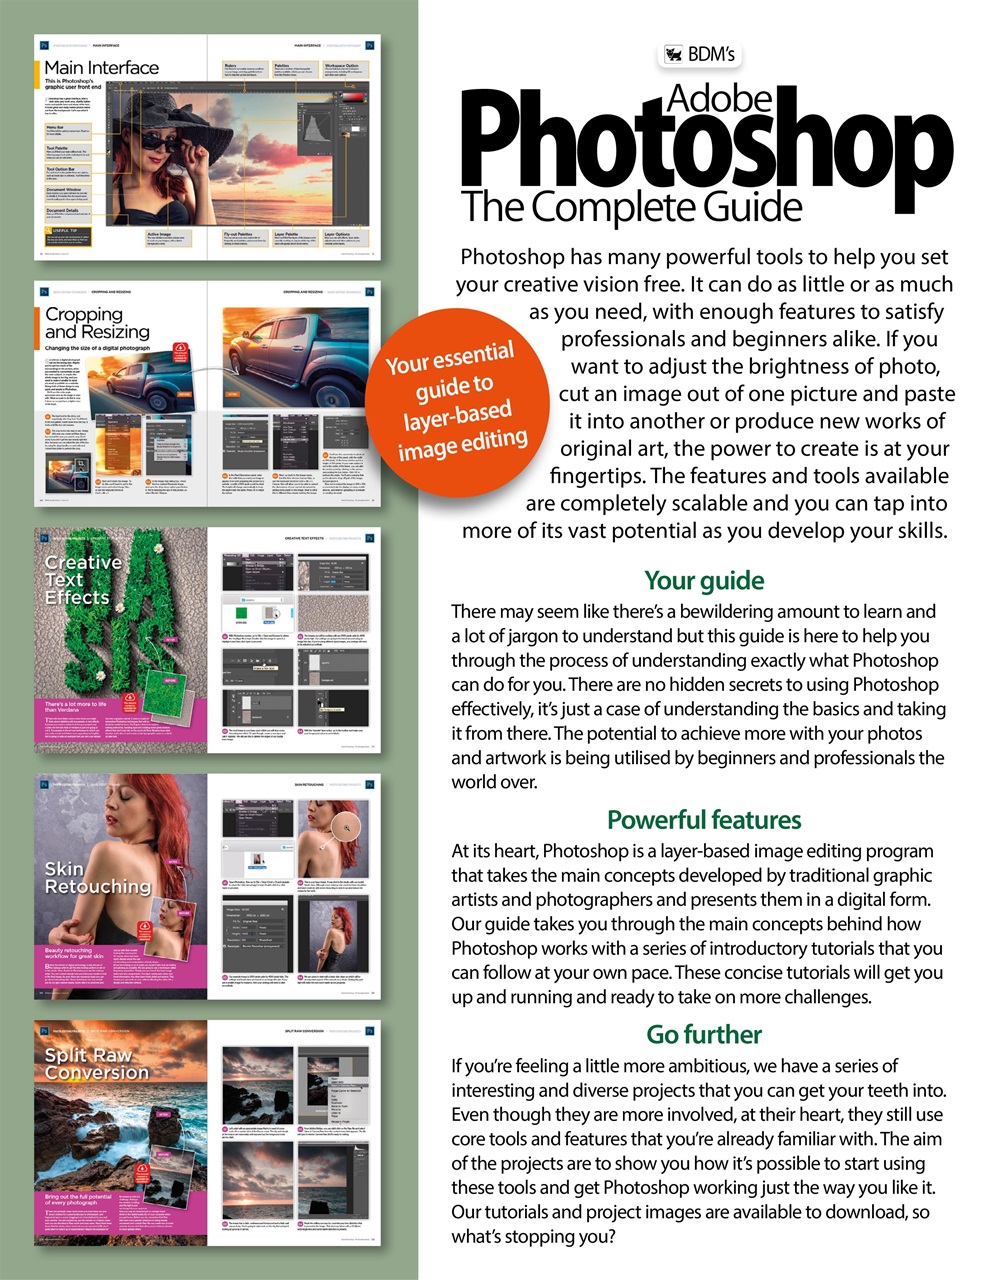 adobe photoshop guide pdf free download